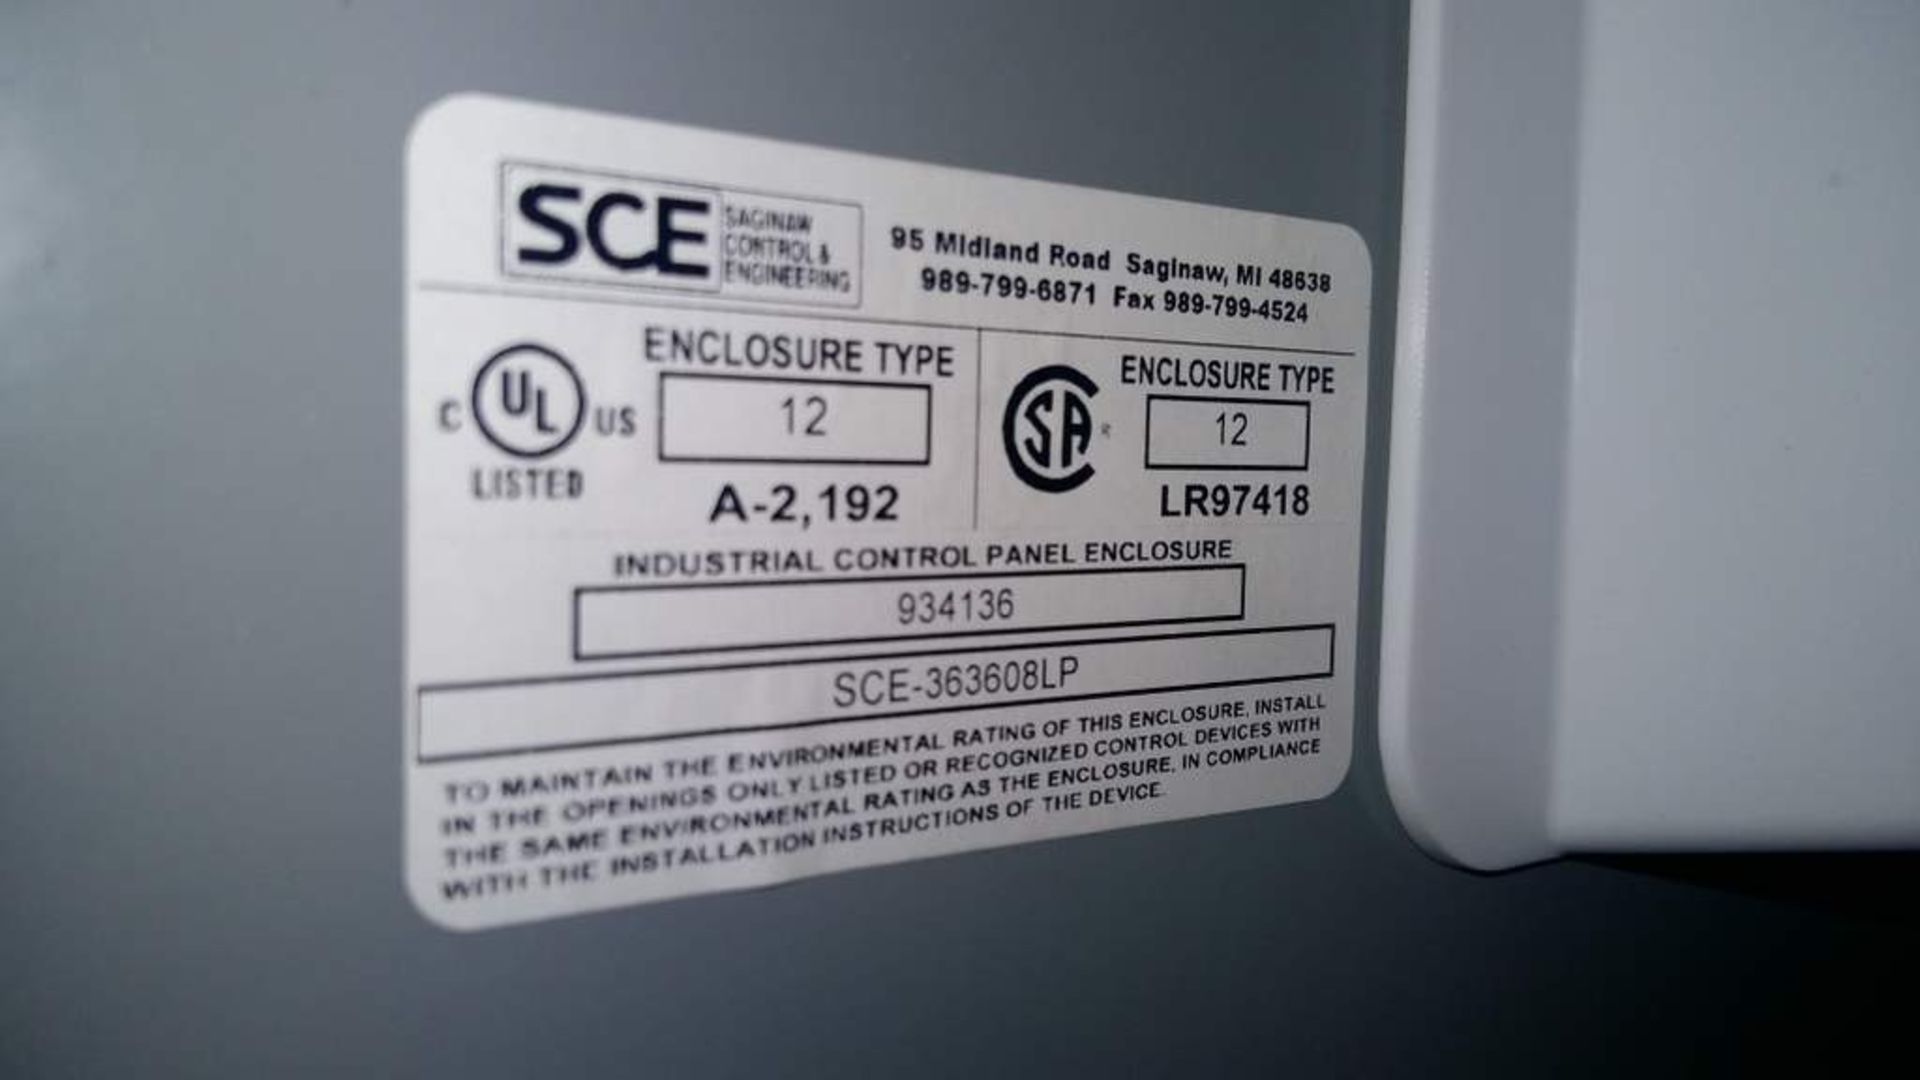 SEC Industrial control panel enclosure - Type 12 - Image 4 of 4